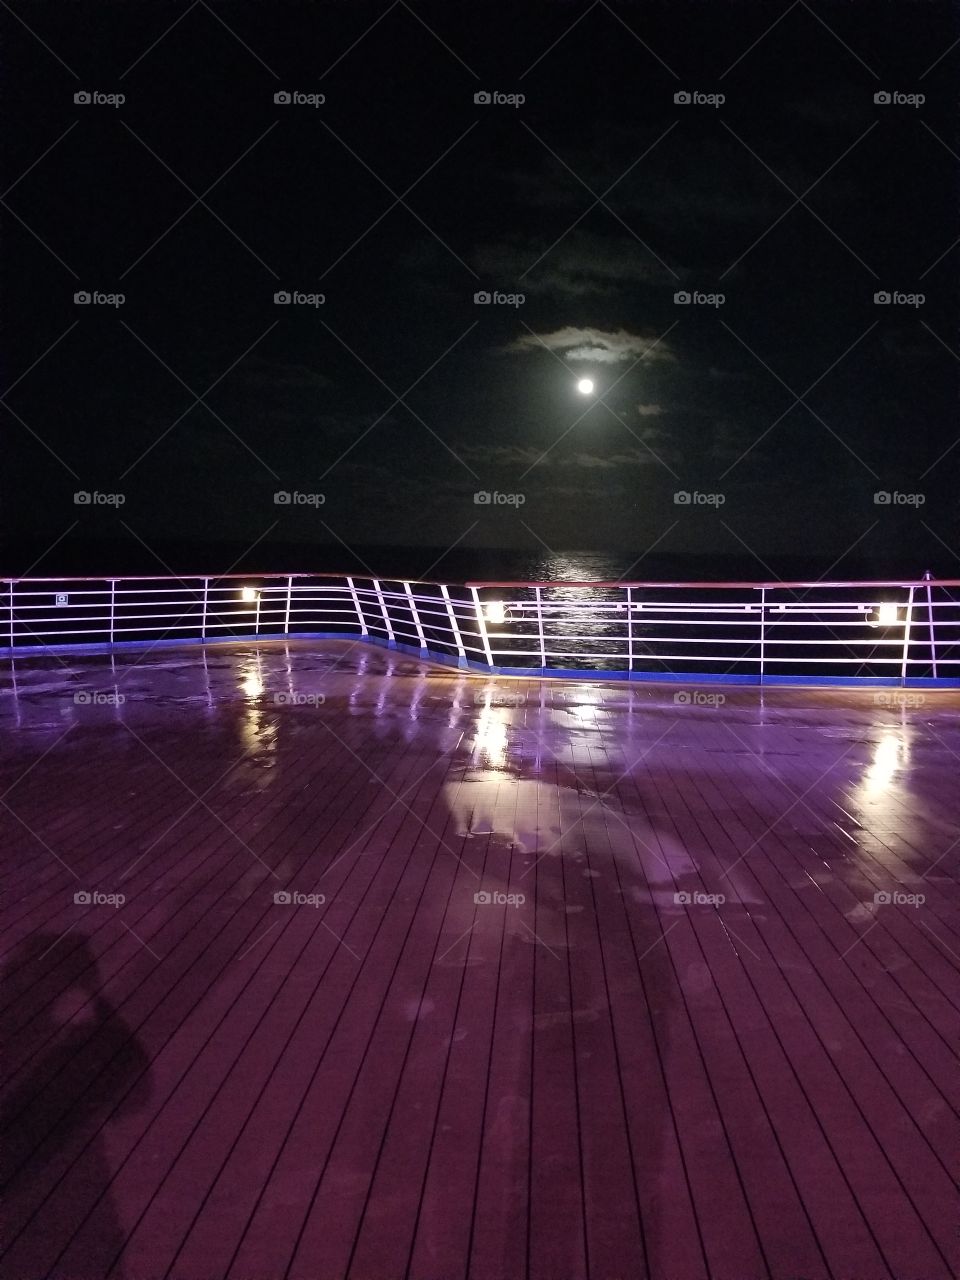 moon lit deck